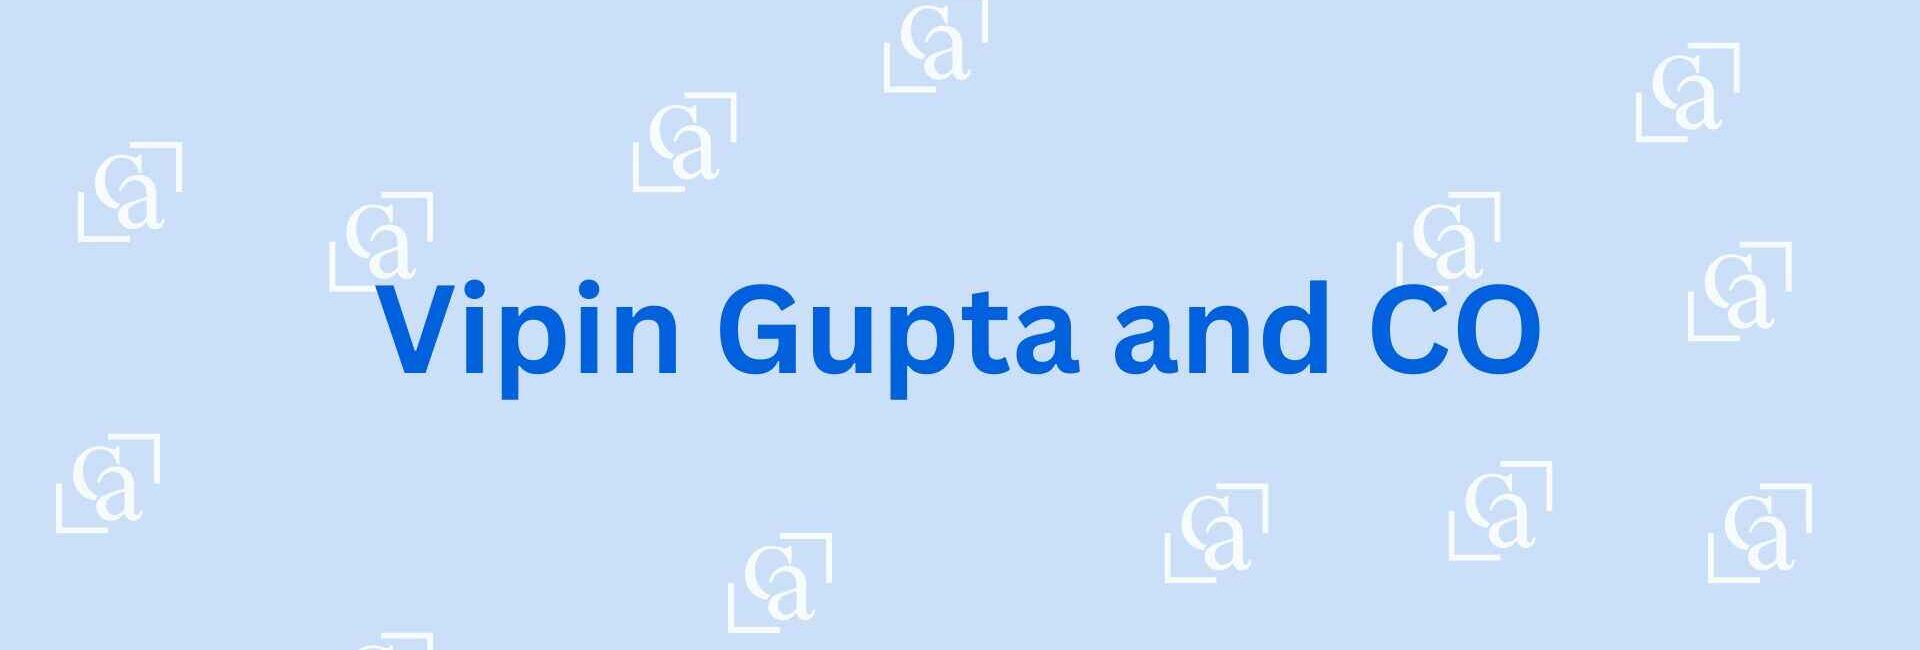 Vipin Gupta and CO - Best Chartered accountant Noida